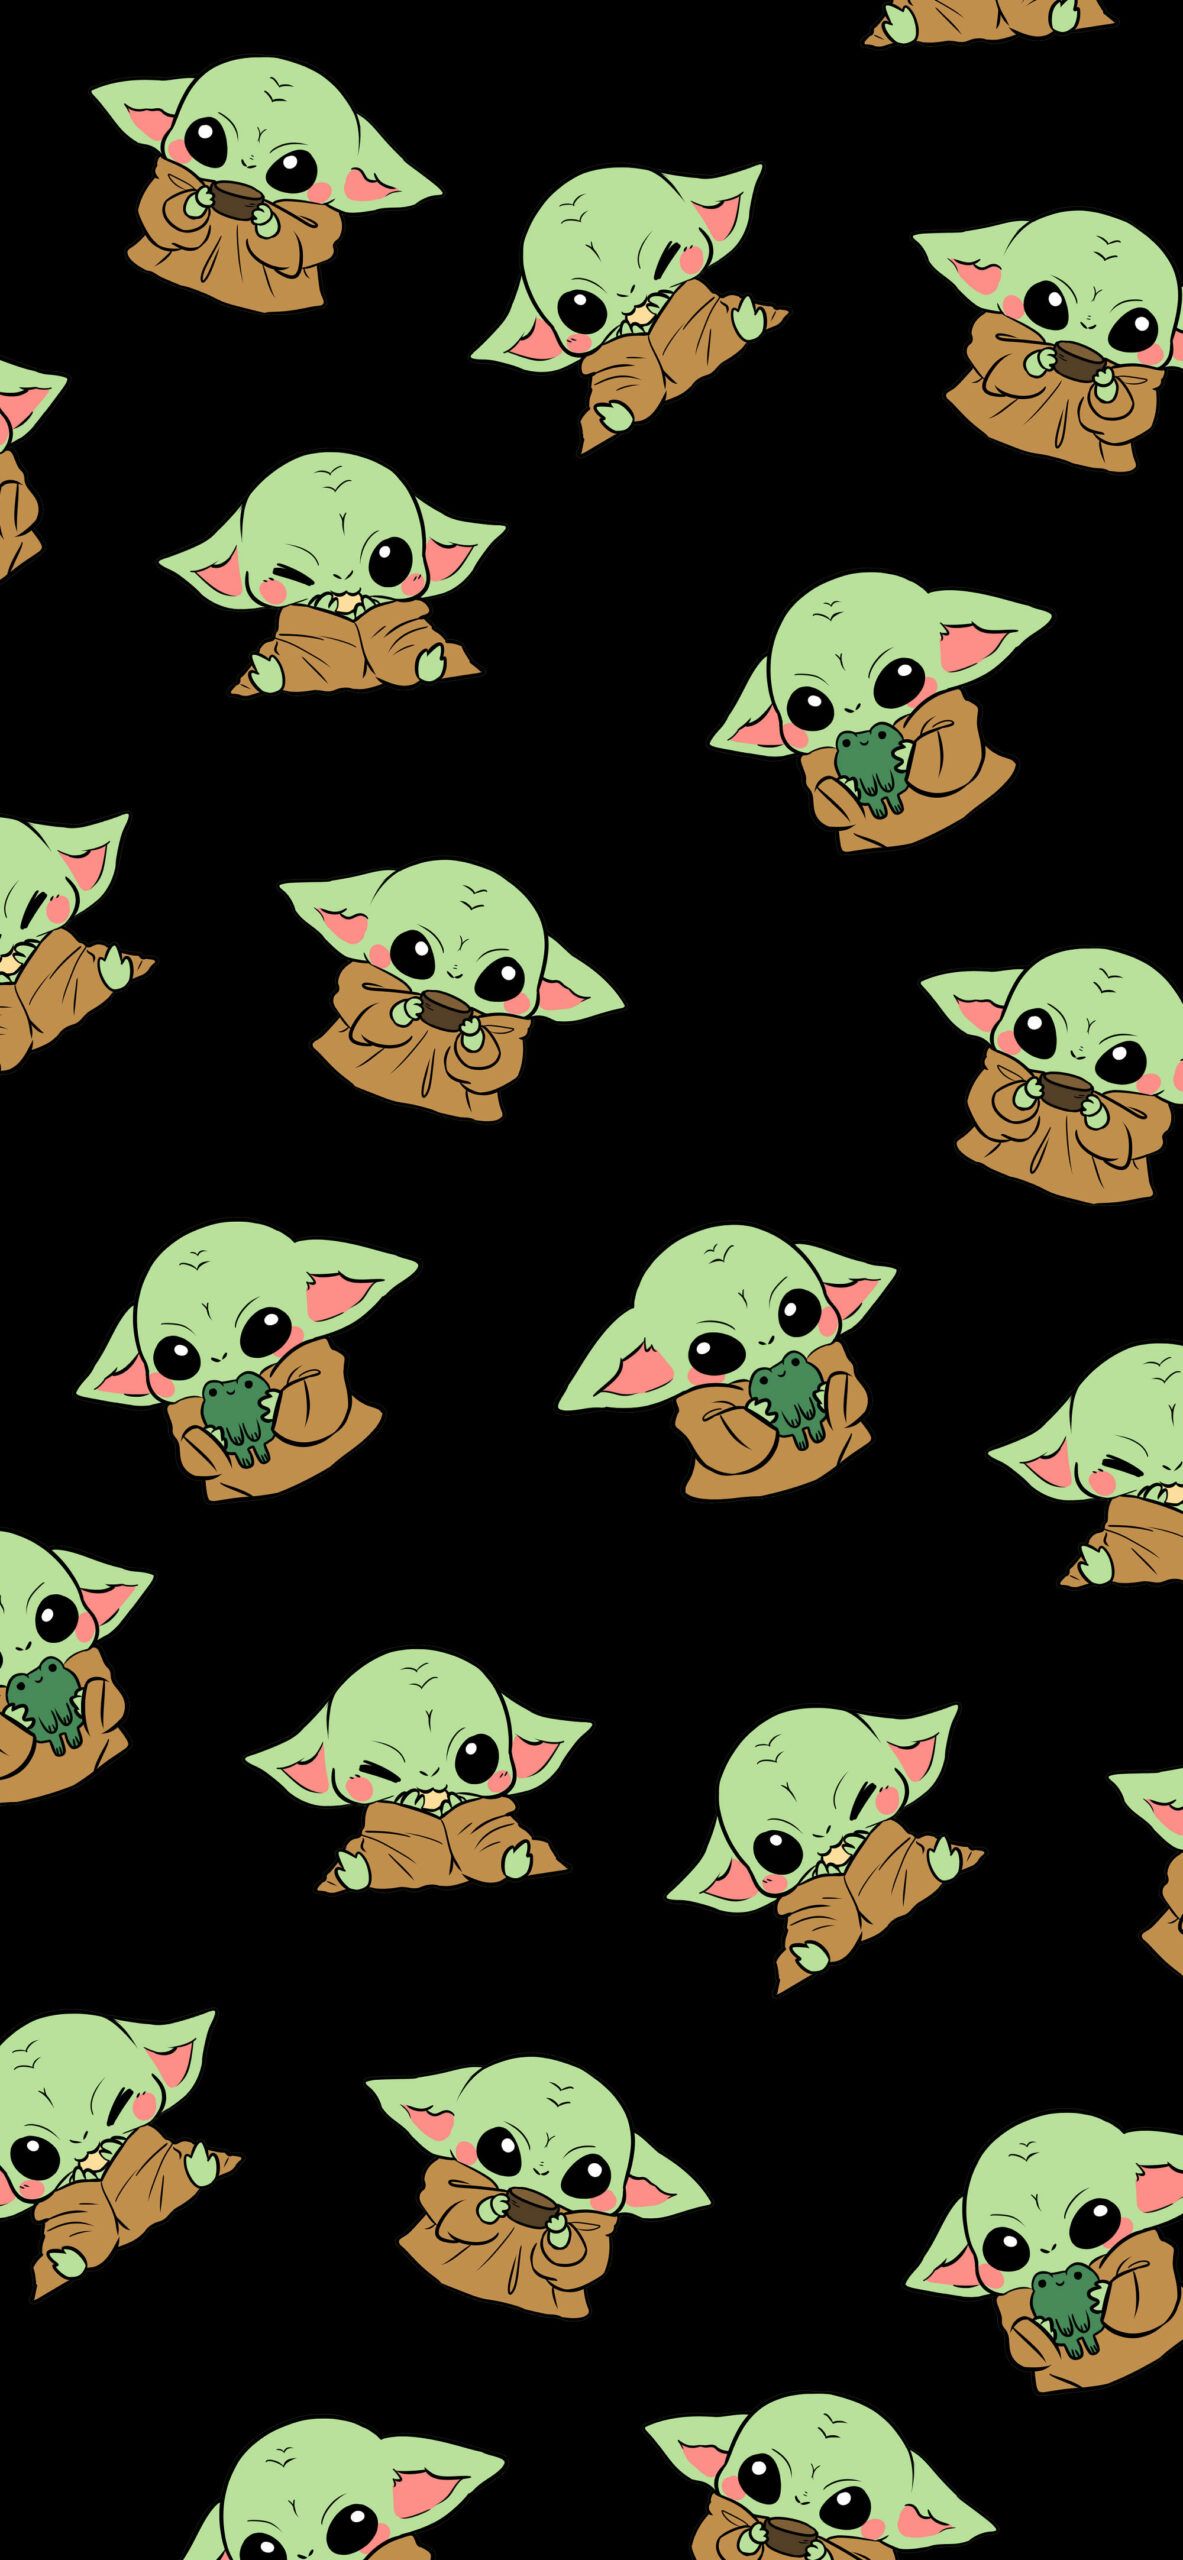 The Mandalorian wallpaper for mobiles and desktops - Baby Yoda